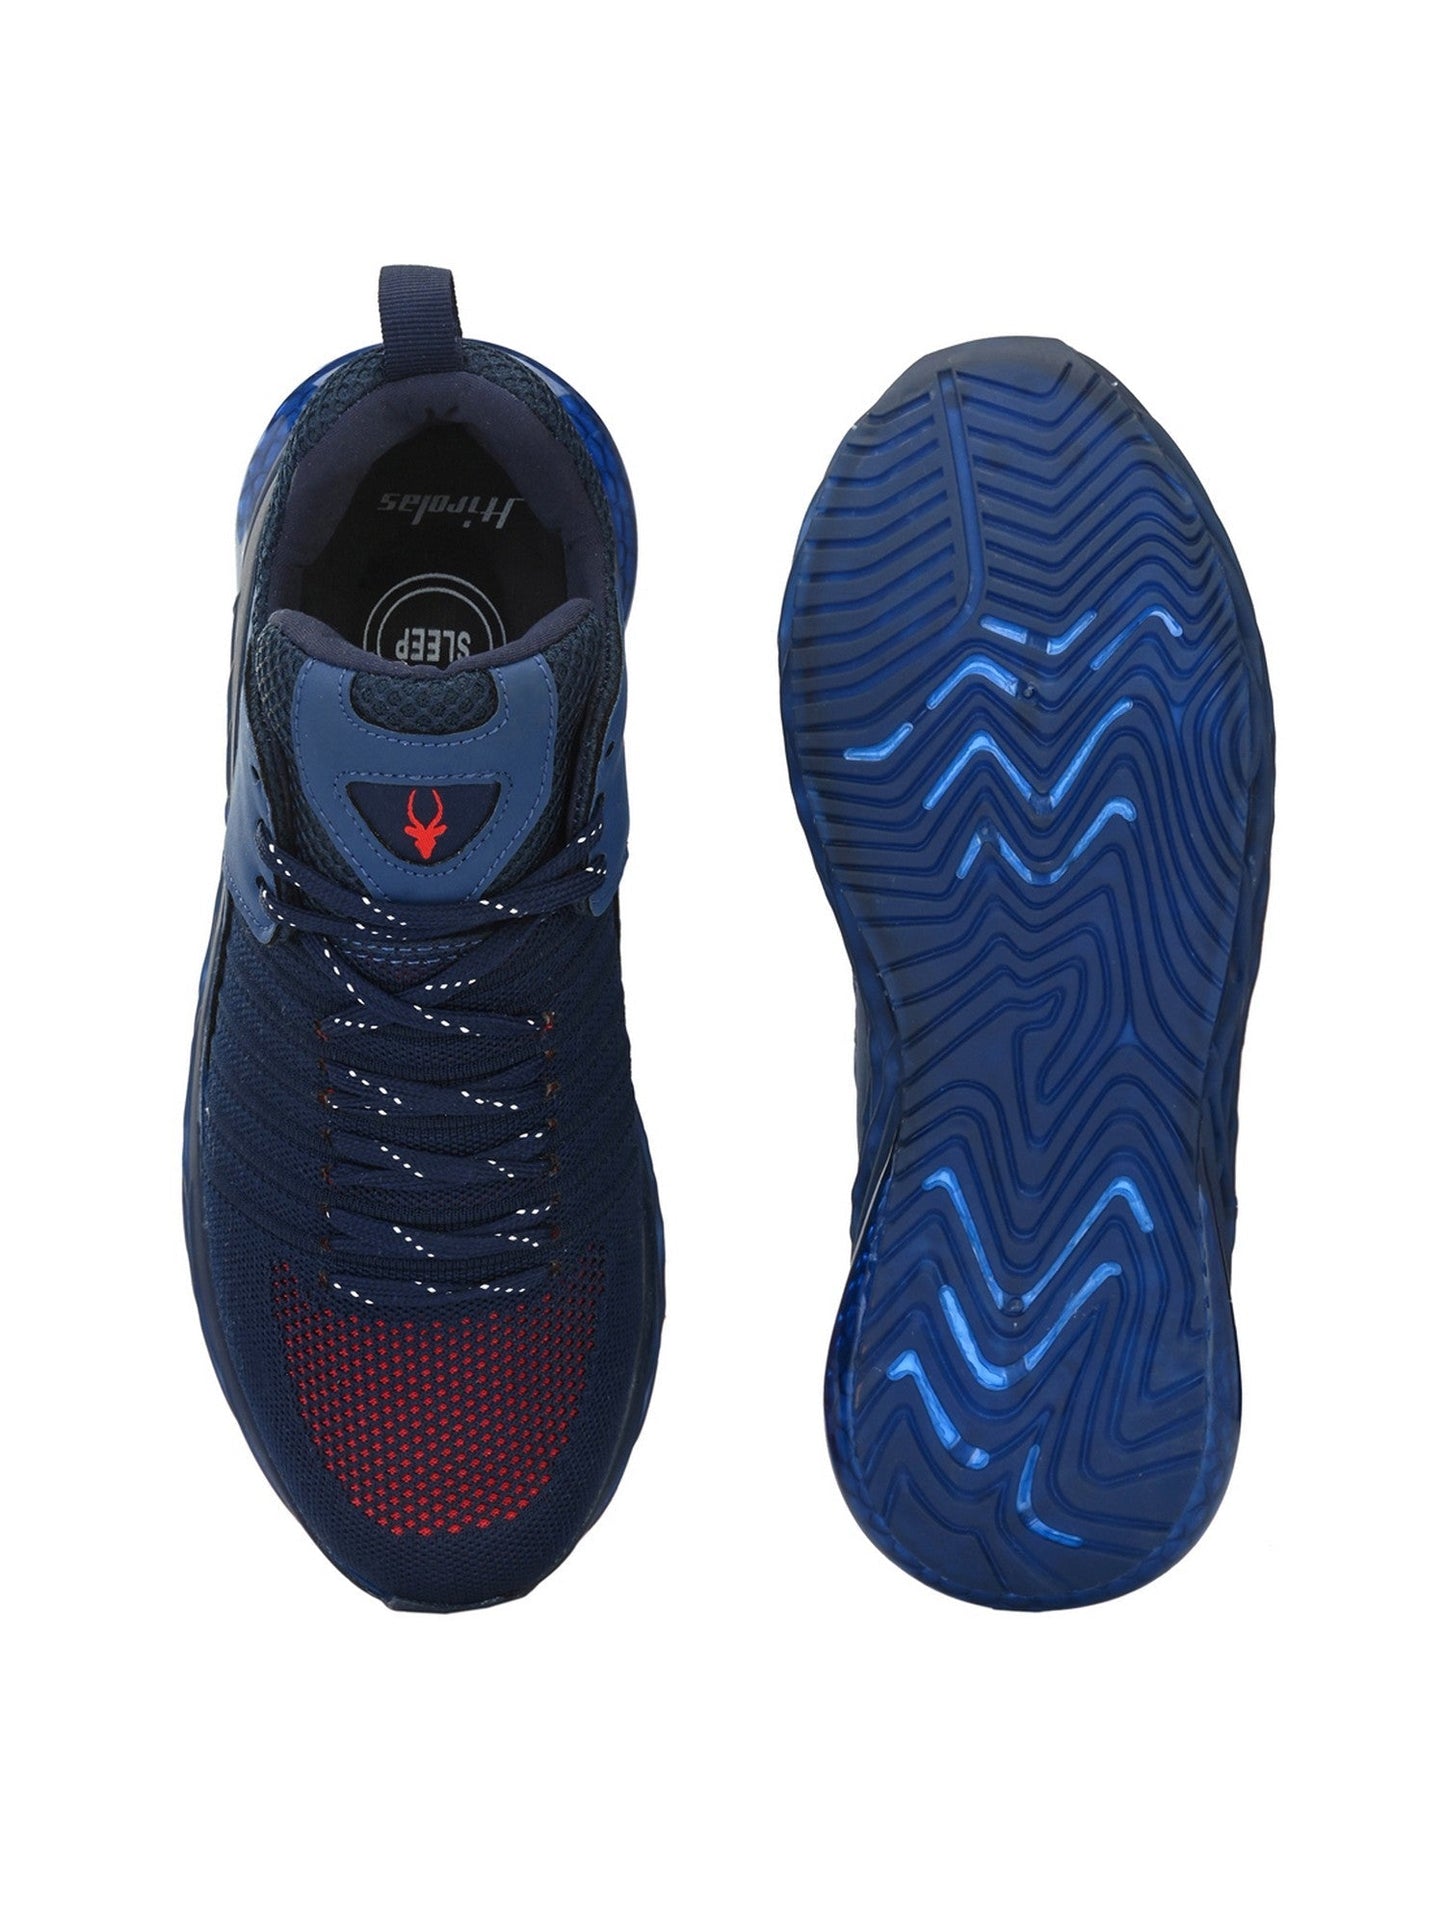 Hirolas® Men's Blue/Red Elite Shock Absorbing Walking running Fitness Athletic Training Gym Ankle Fashion Lace Up Sport Shoes (HRLMP03BLU)